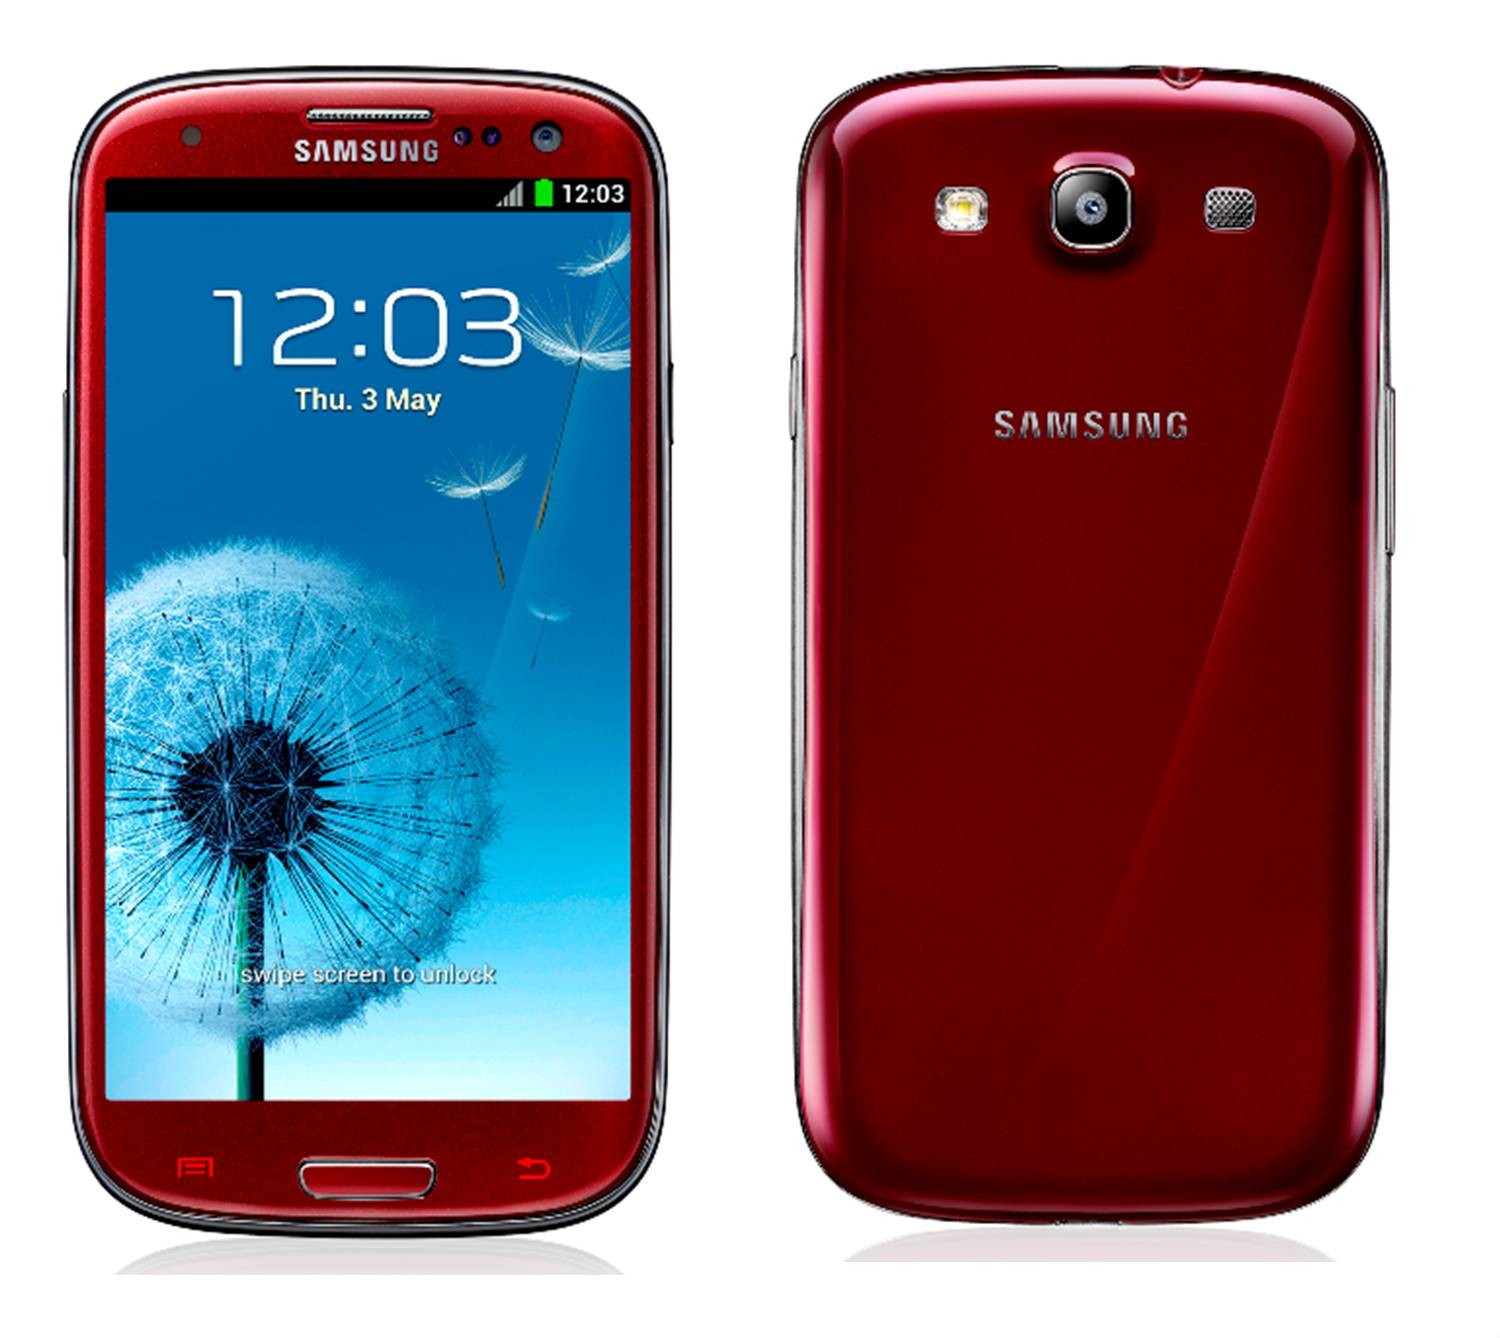 Galaxy 3 ru. Samsung gt-i9300. Самсунг s3 Duos. Самсунг gt i9300. Samsung 9300.